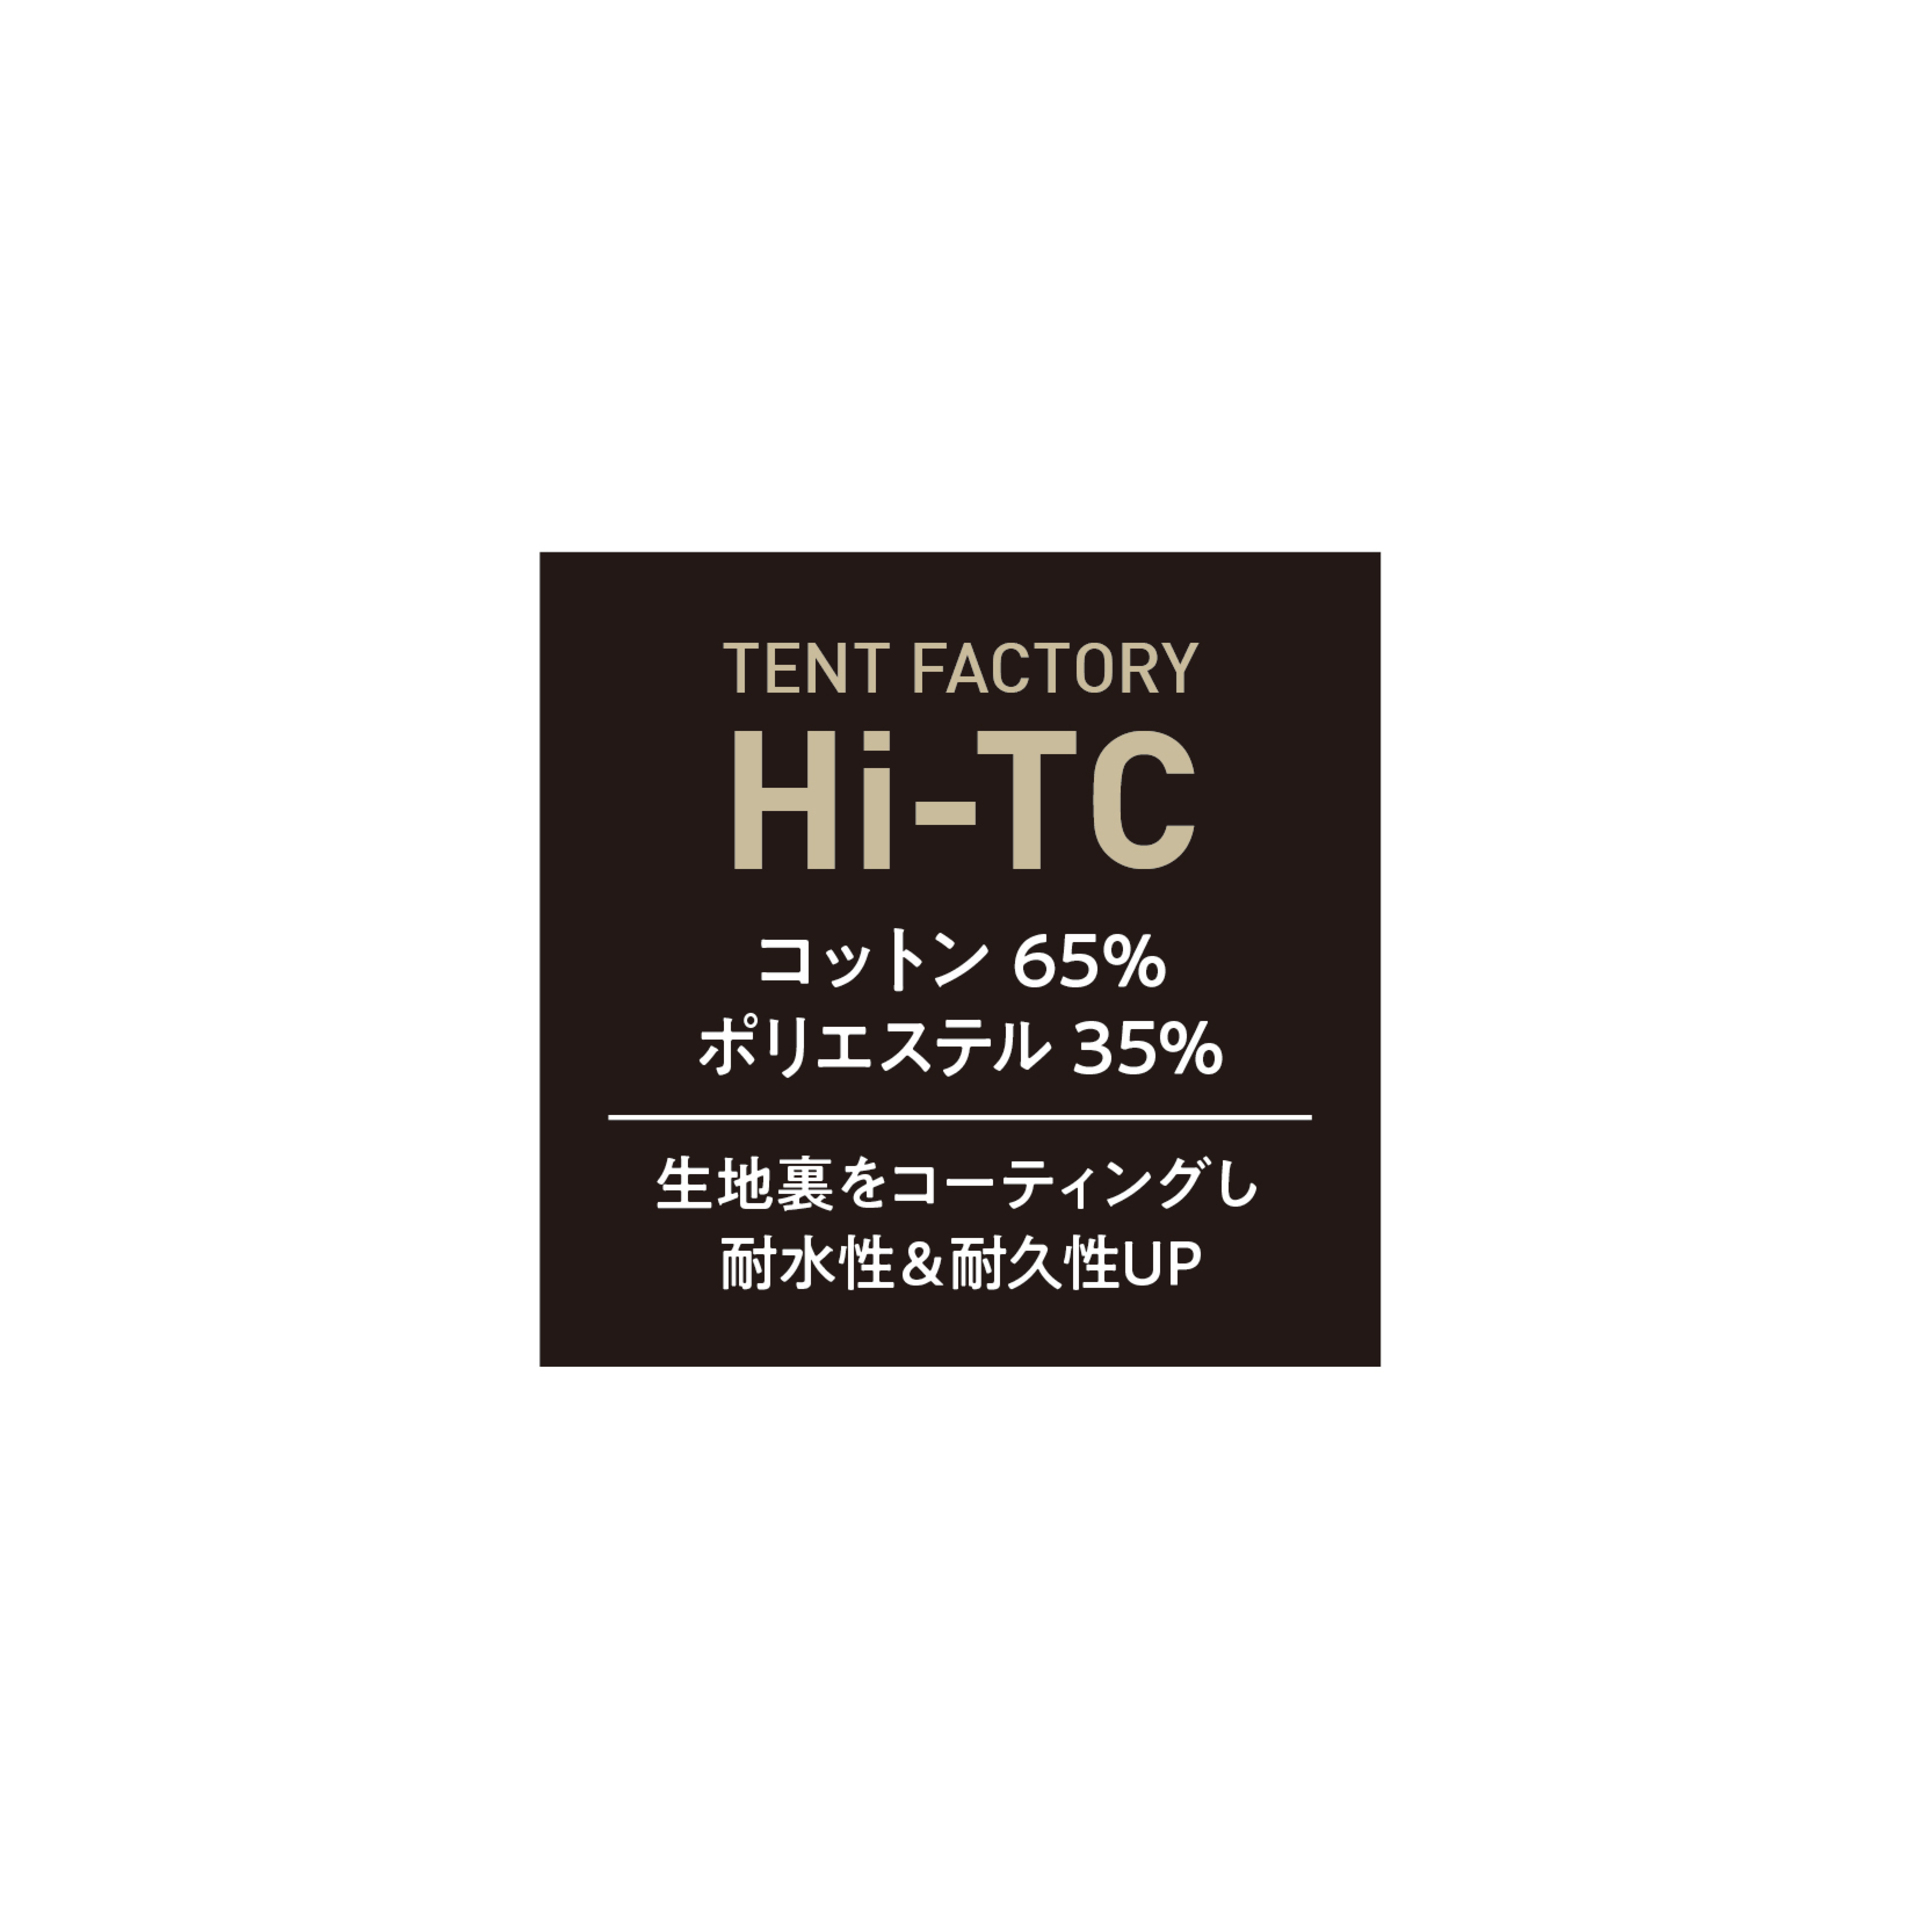 Hi-TC ワイドヘキサゴン タープ470